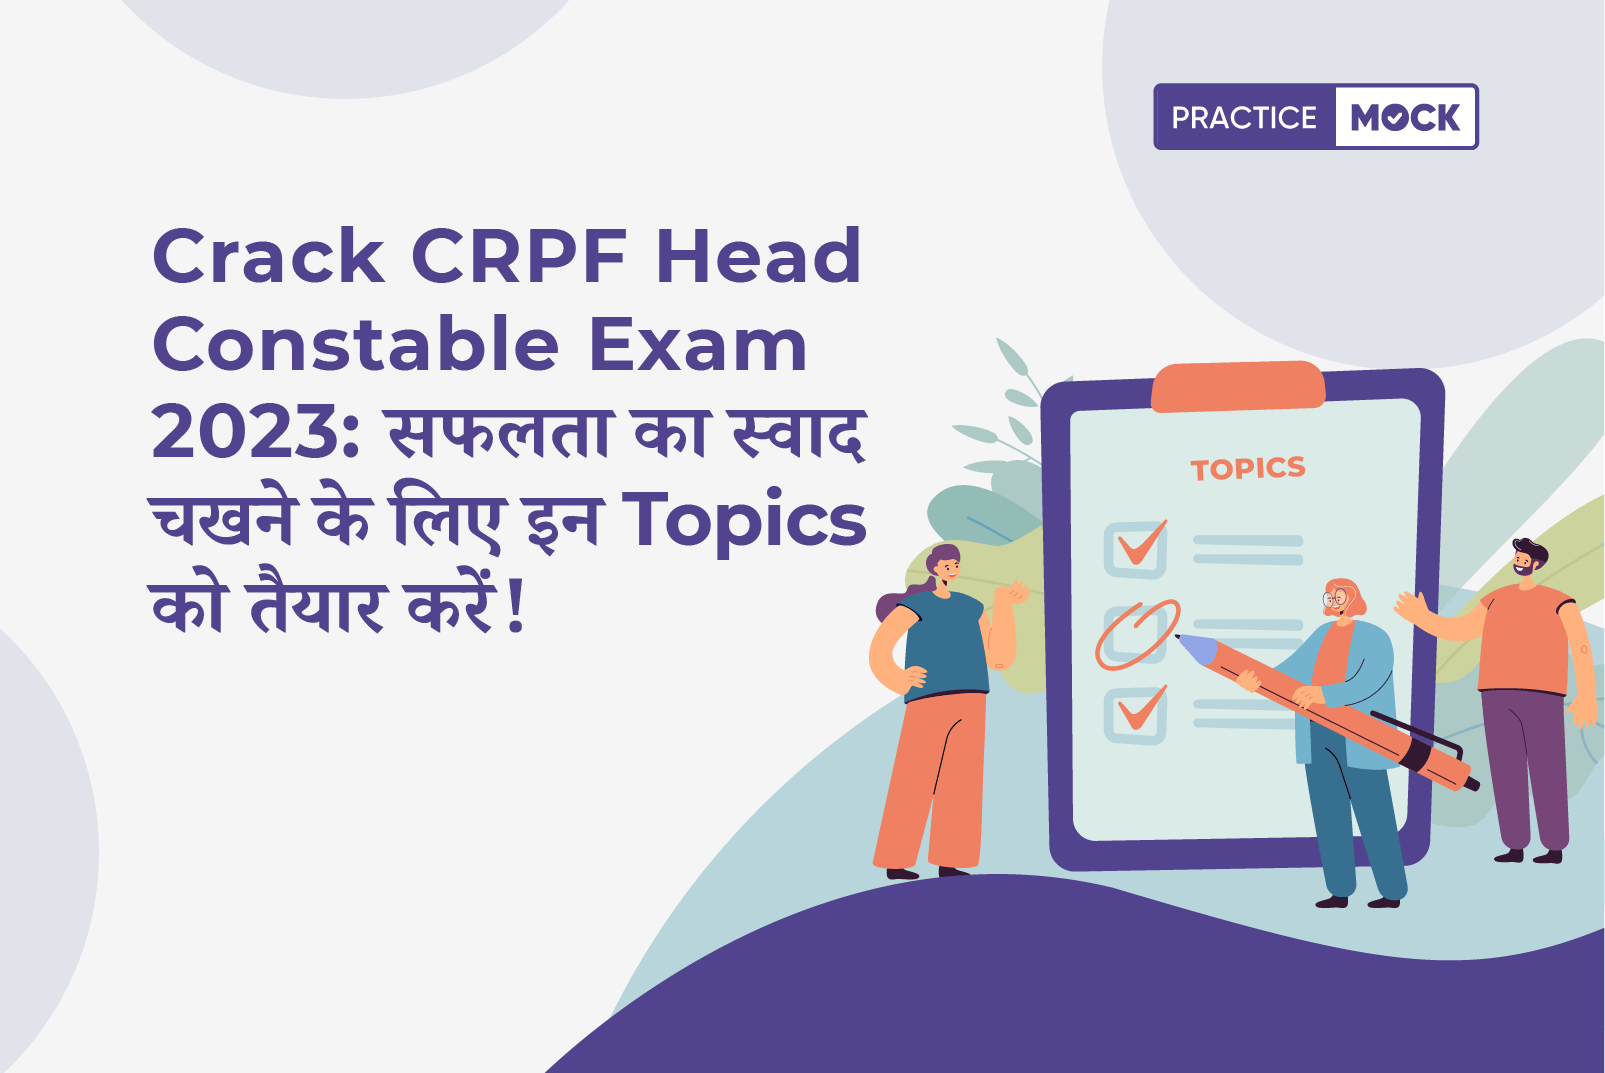 Important Topics for CRPF Head Constable Exam 2023